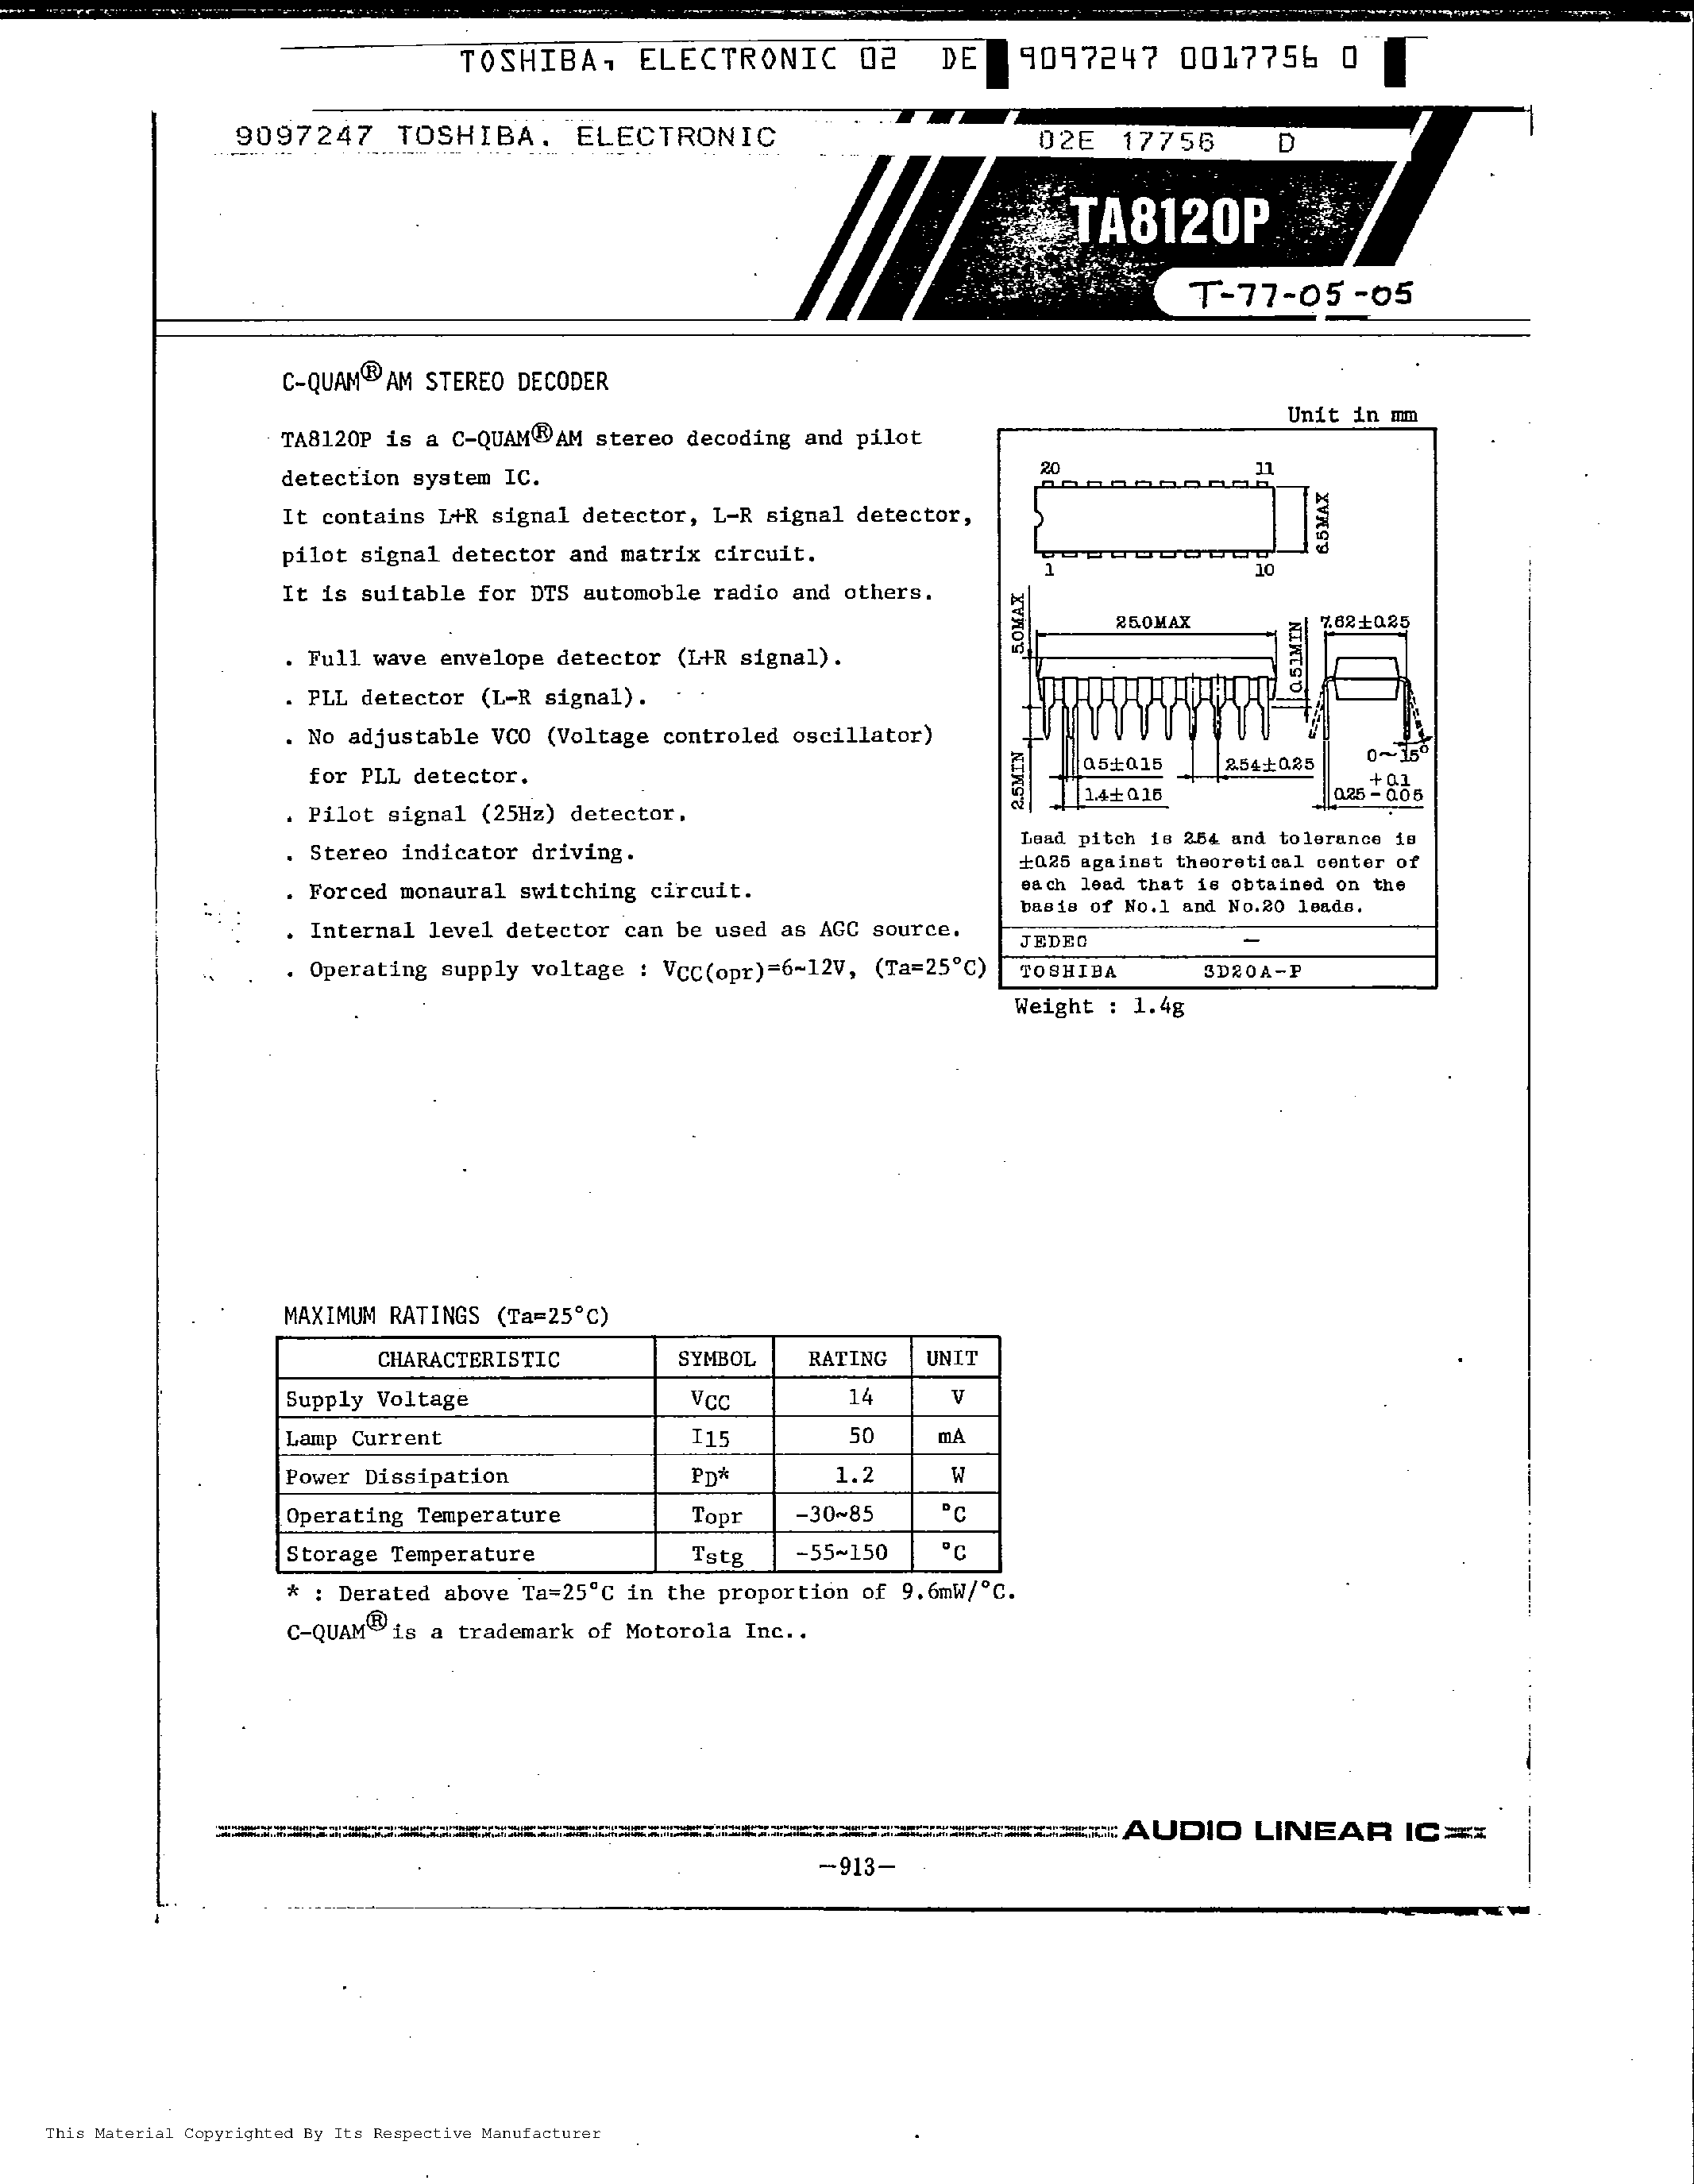 Datasheet TA8120P - C-QUAM AM STEREO DECODER page 1